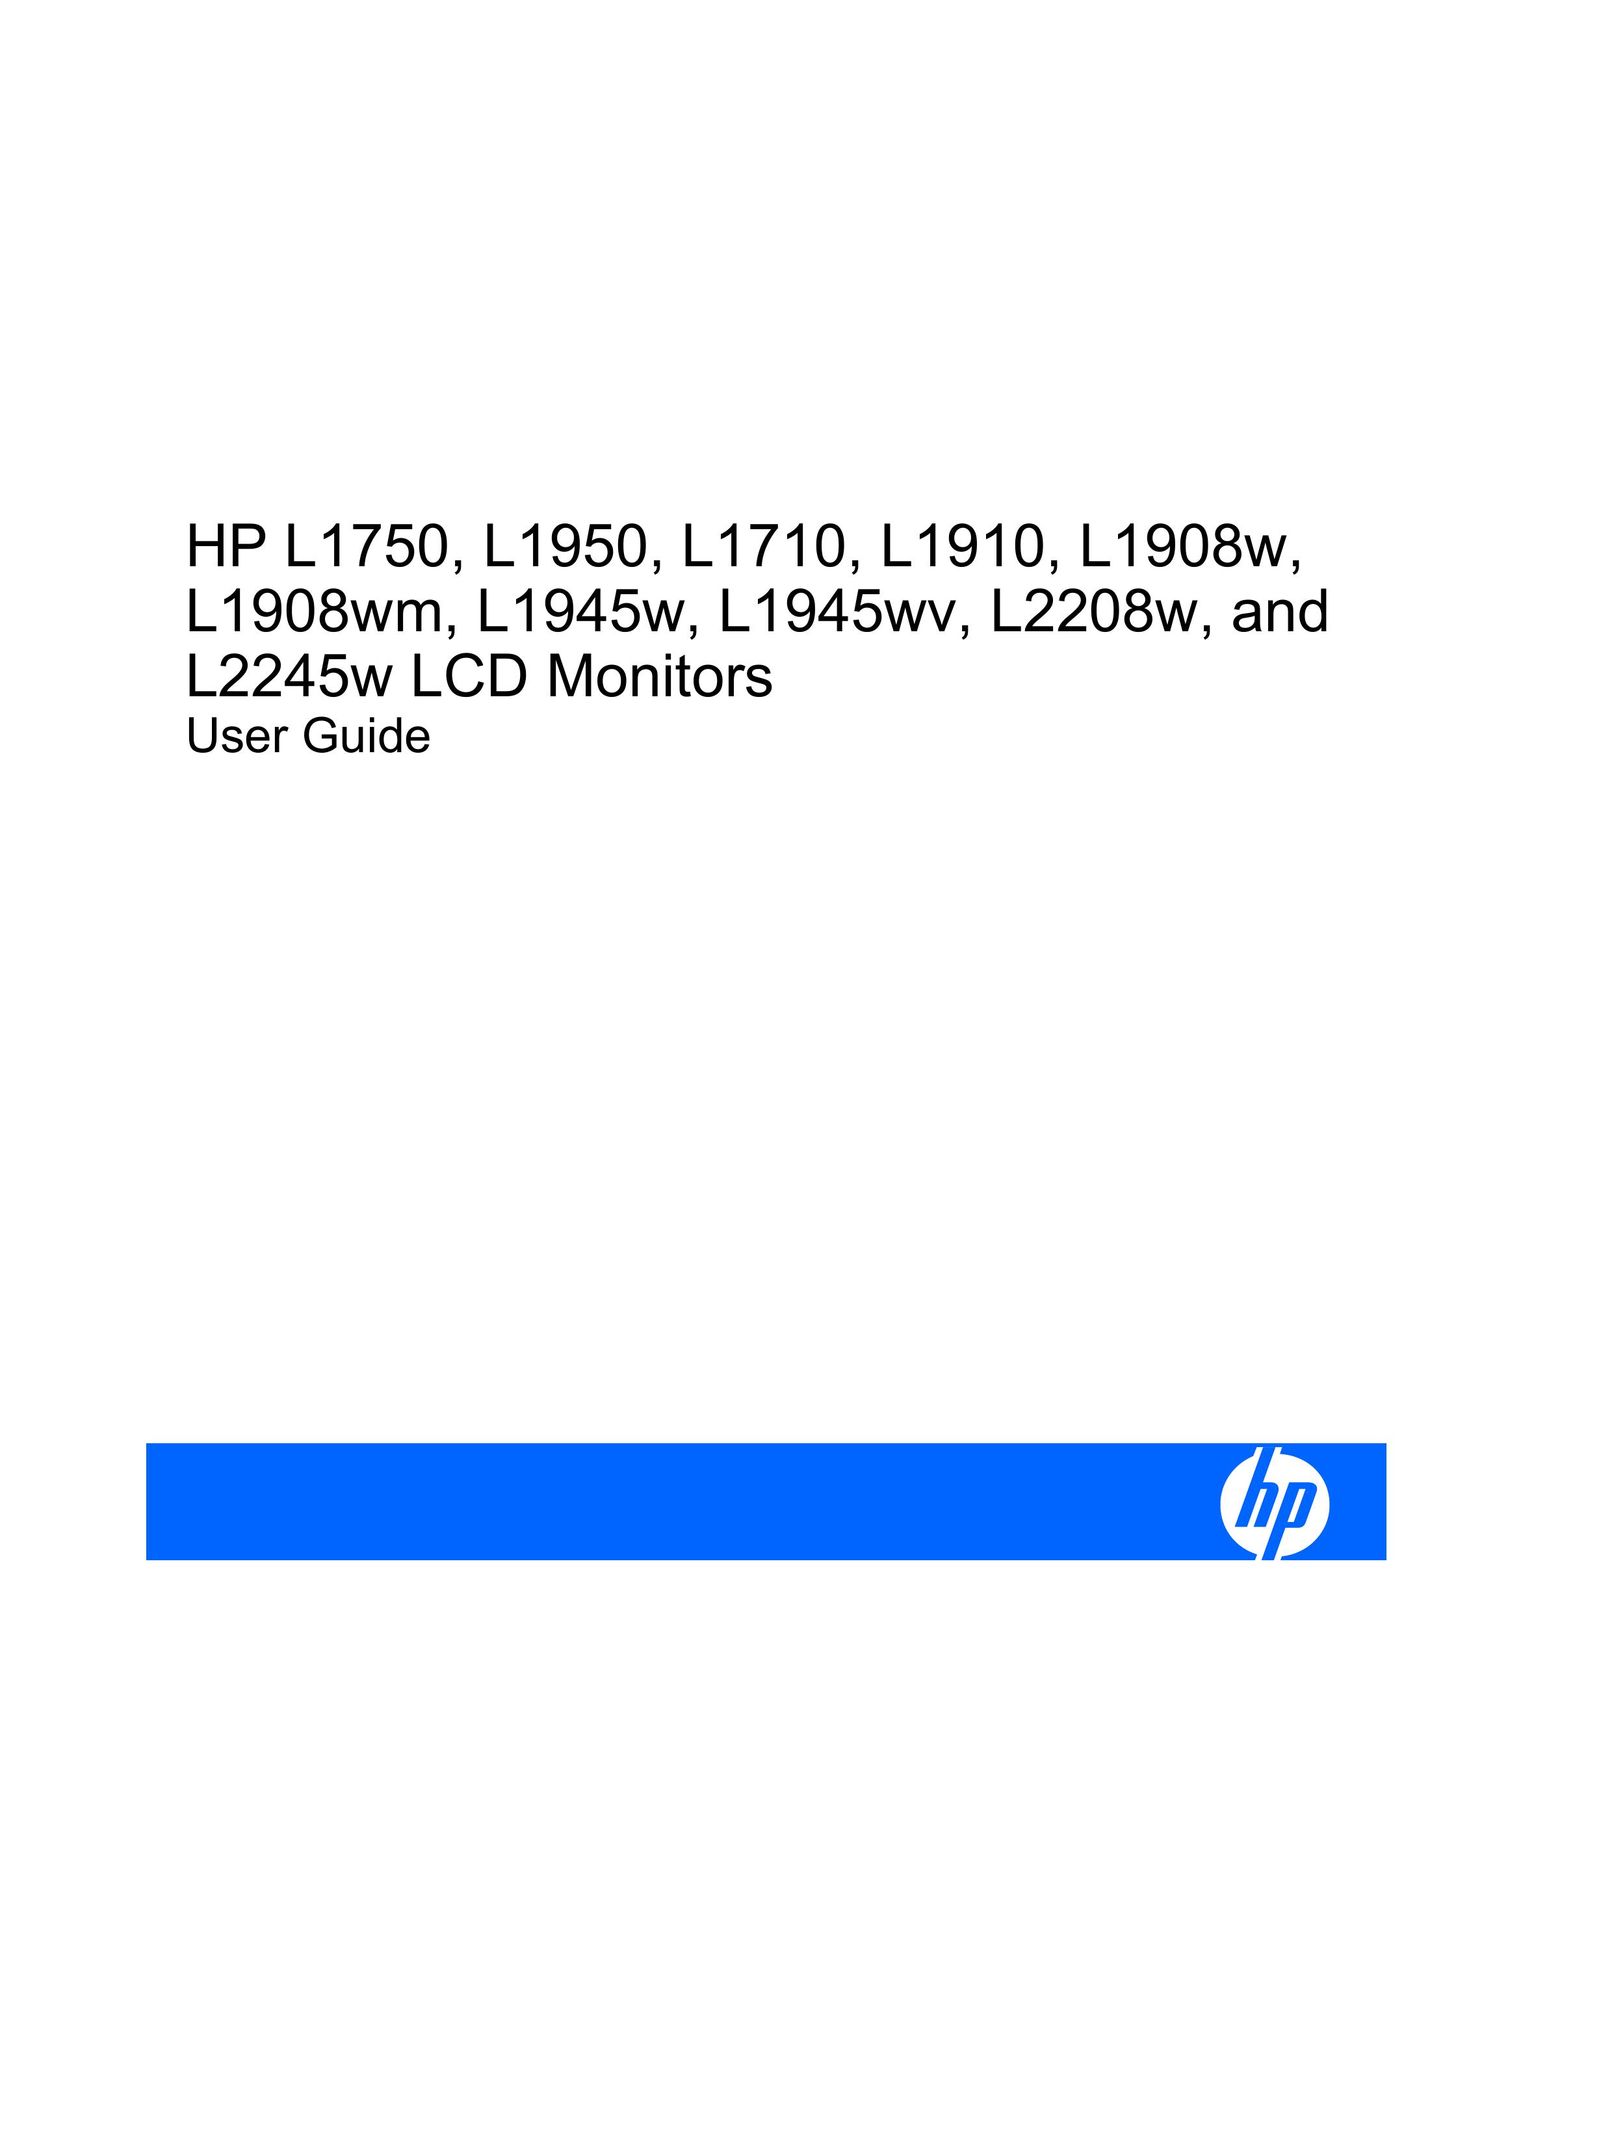 HP (Hewlett-Packard) L1750 Flat Panel Television User Manual